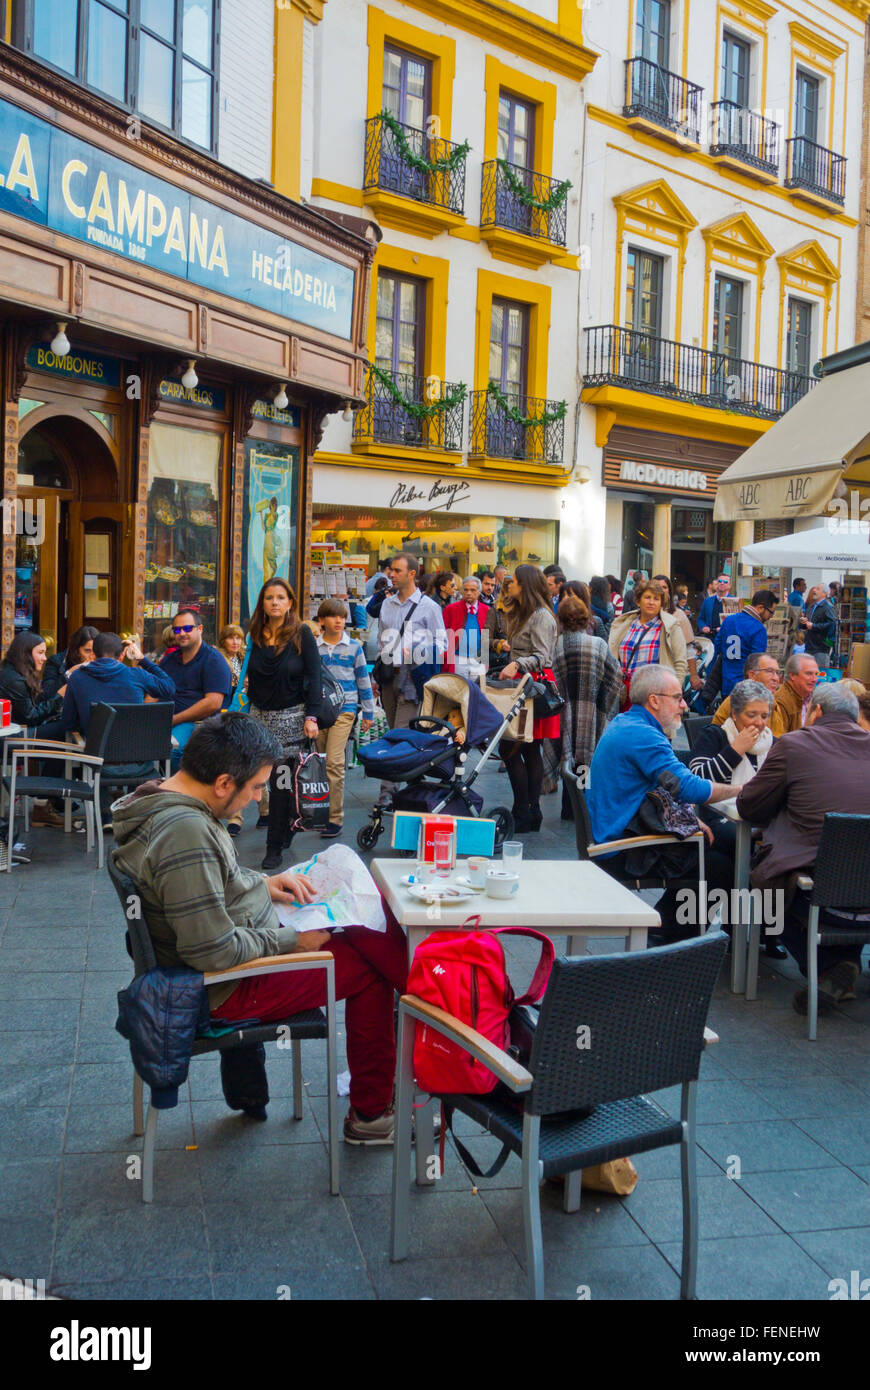 La Campana, cafe, Calle Campana, Sevilla, Andalucia, Spain Stock Photo